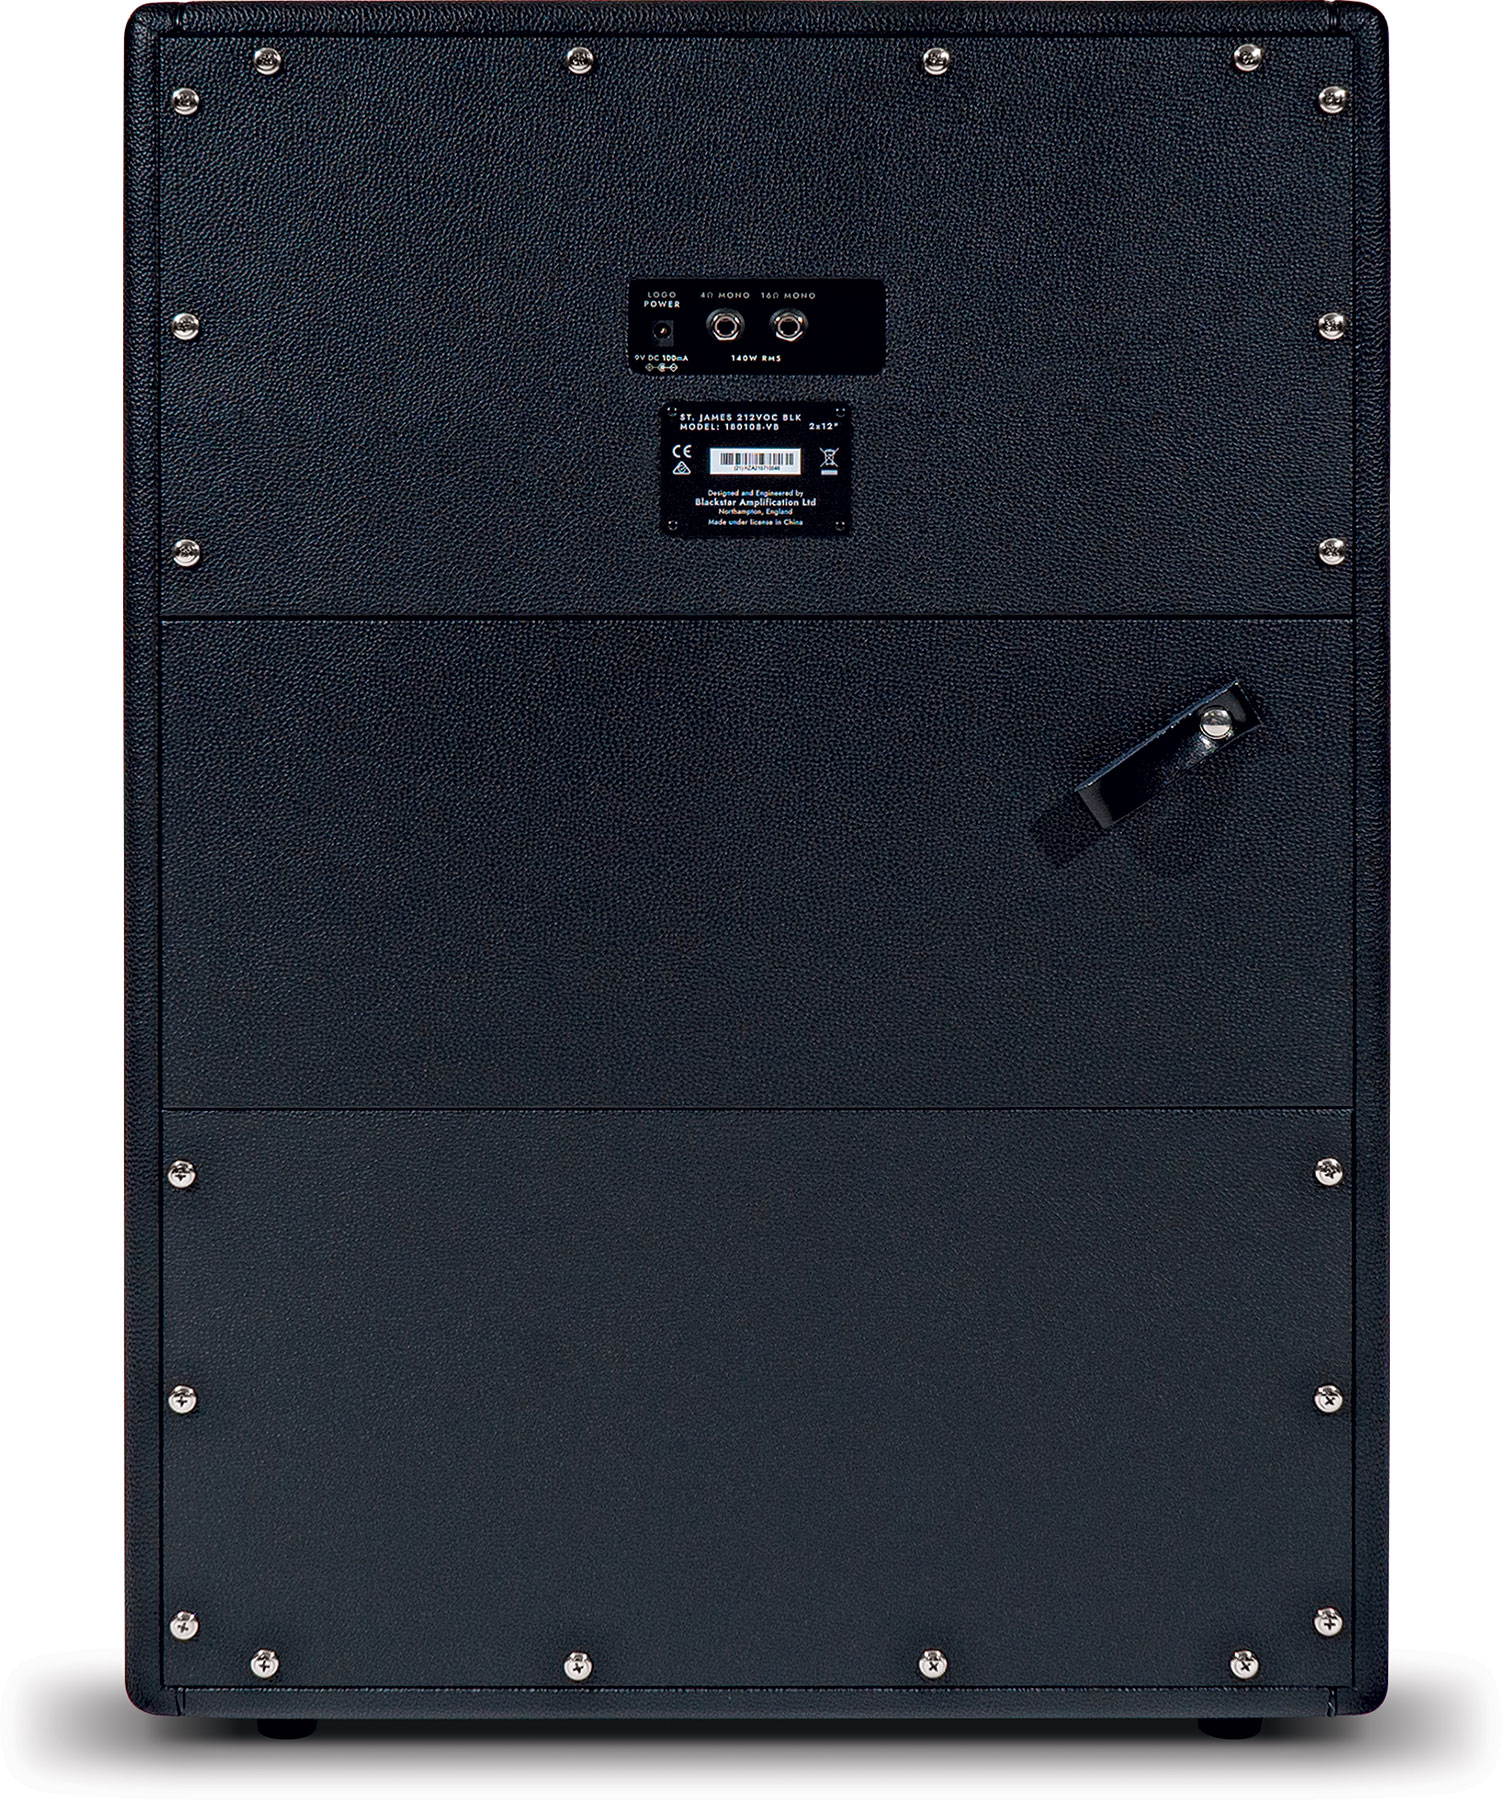 Blackstar St. James 212 Voc 2x12 140w 4/16-ohms Black - Electric guitar amp cabinet - Variation 2